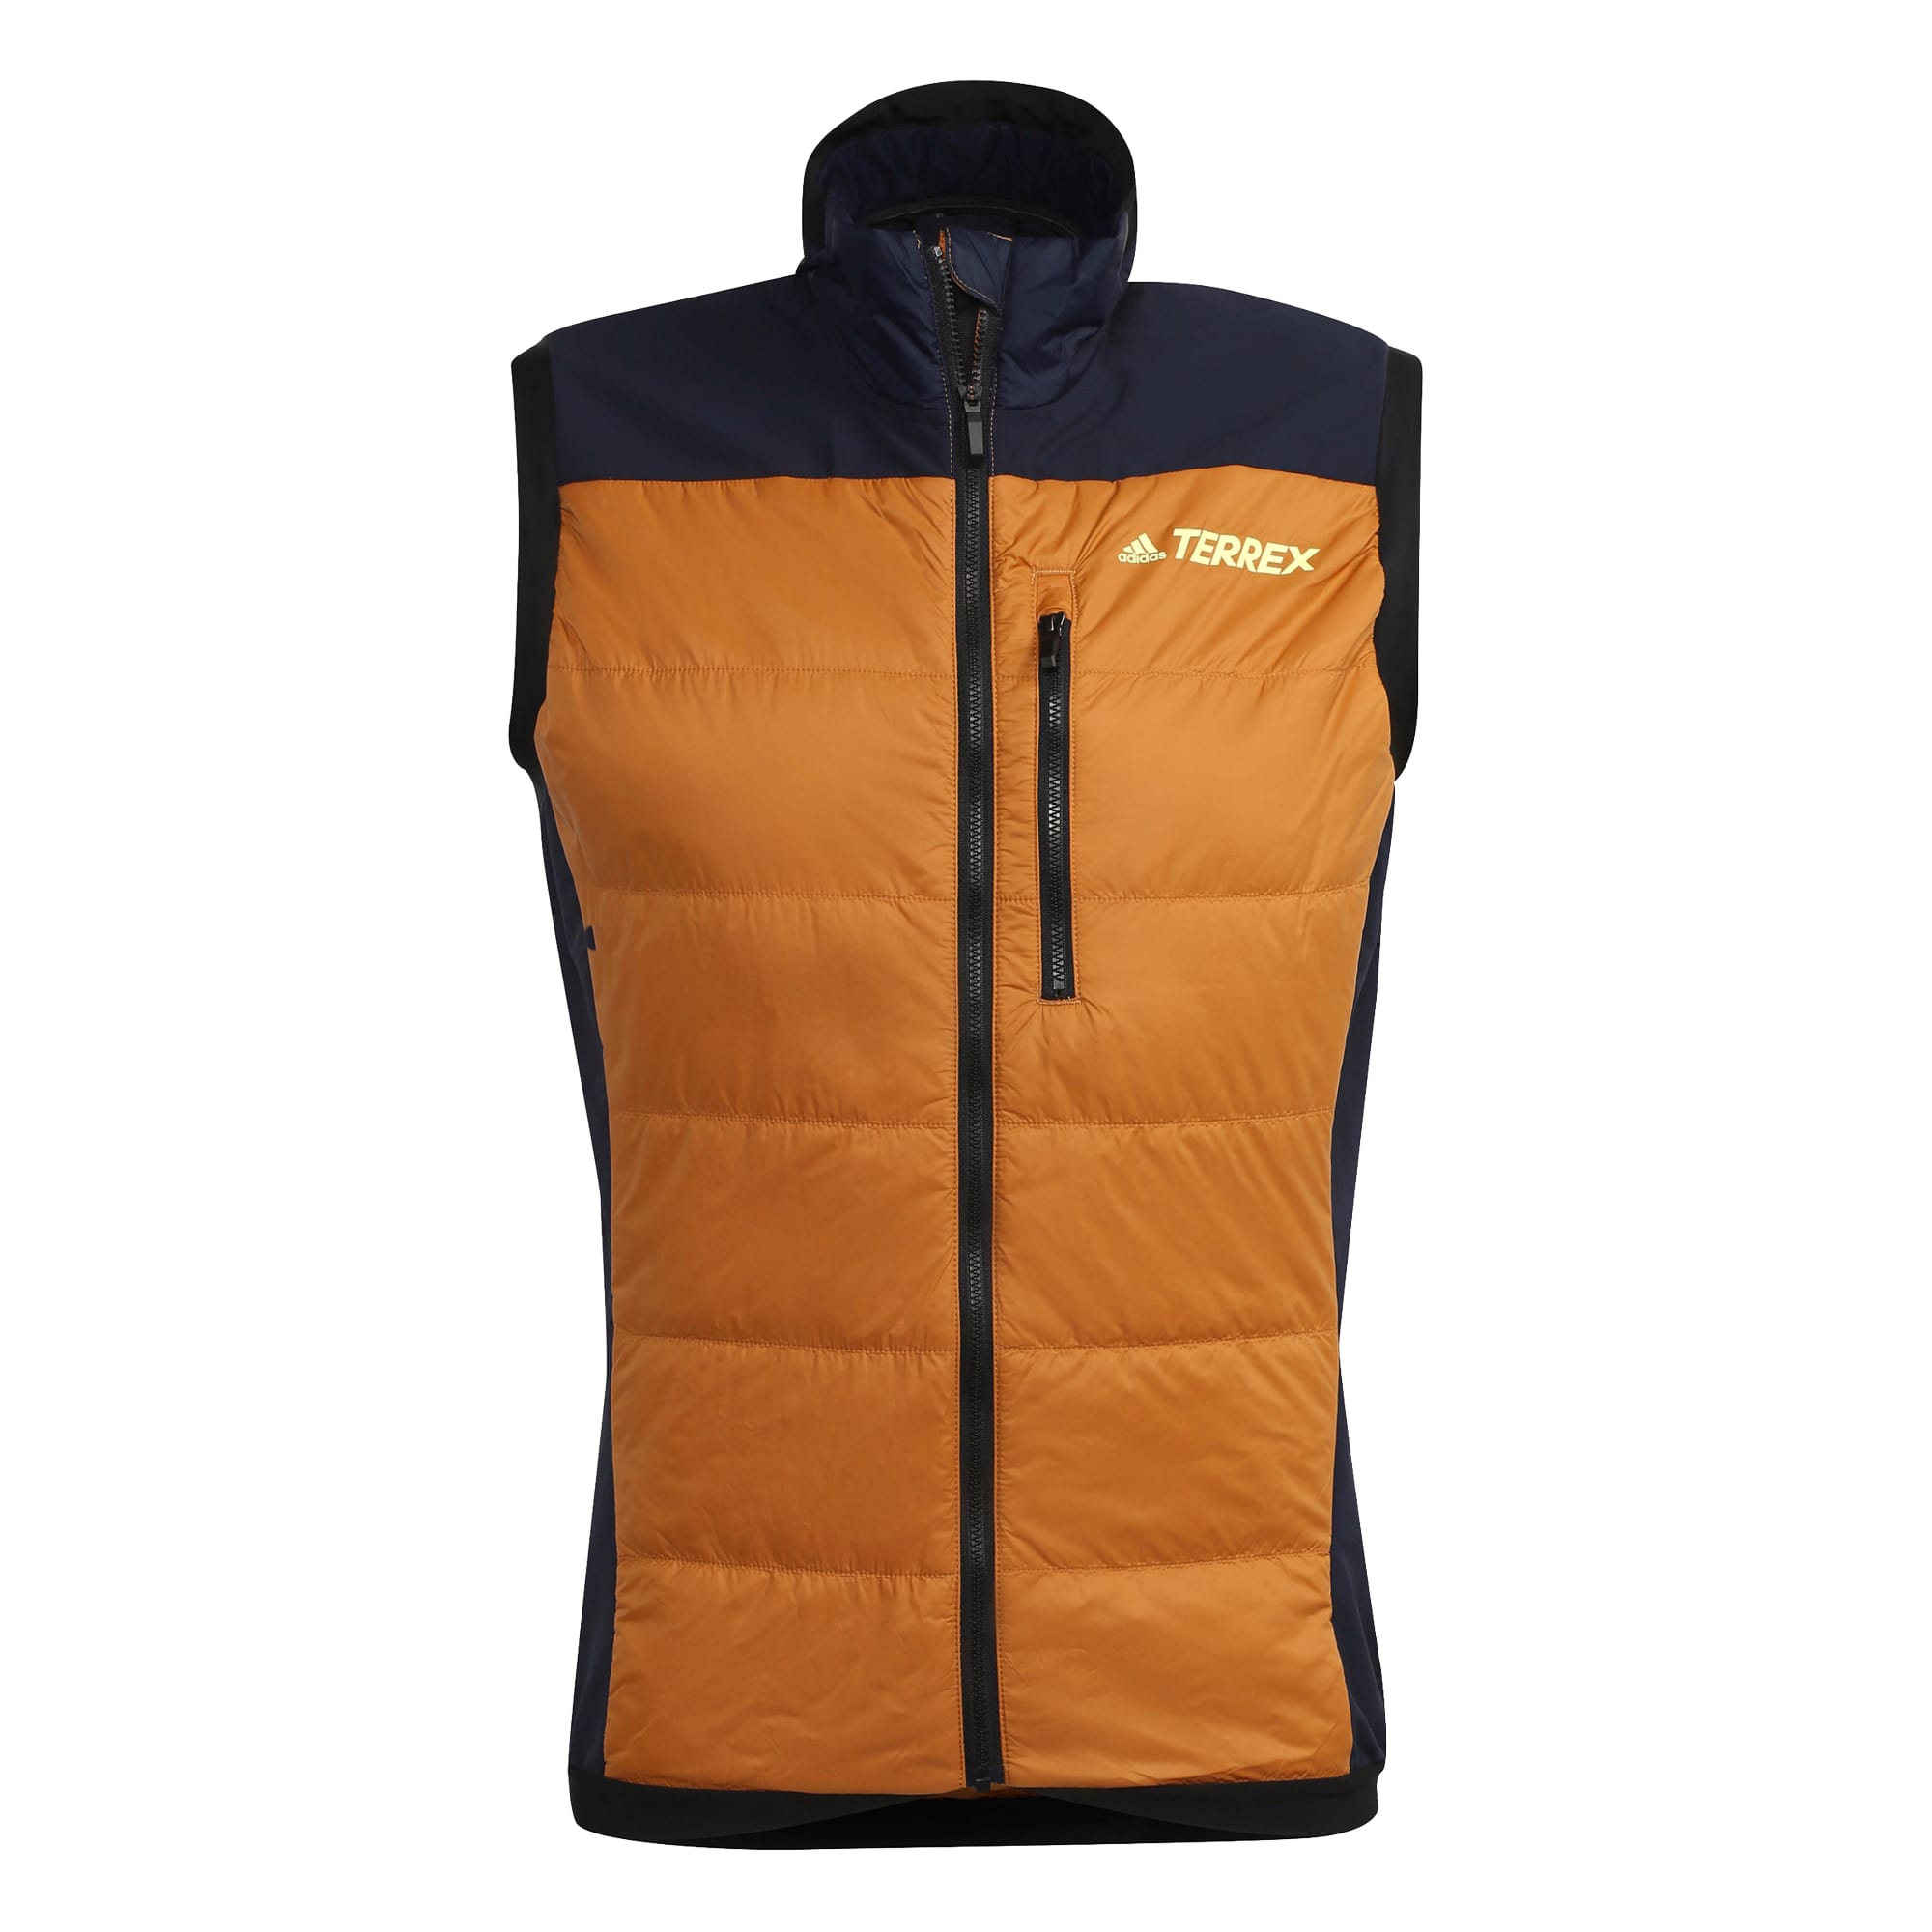 Buy Adidas Men's Terrex Primaloft Hybrid Insulation Vest from Outnorth